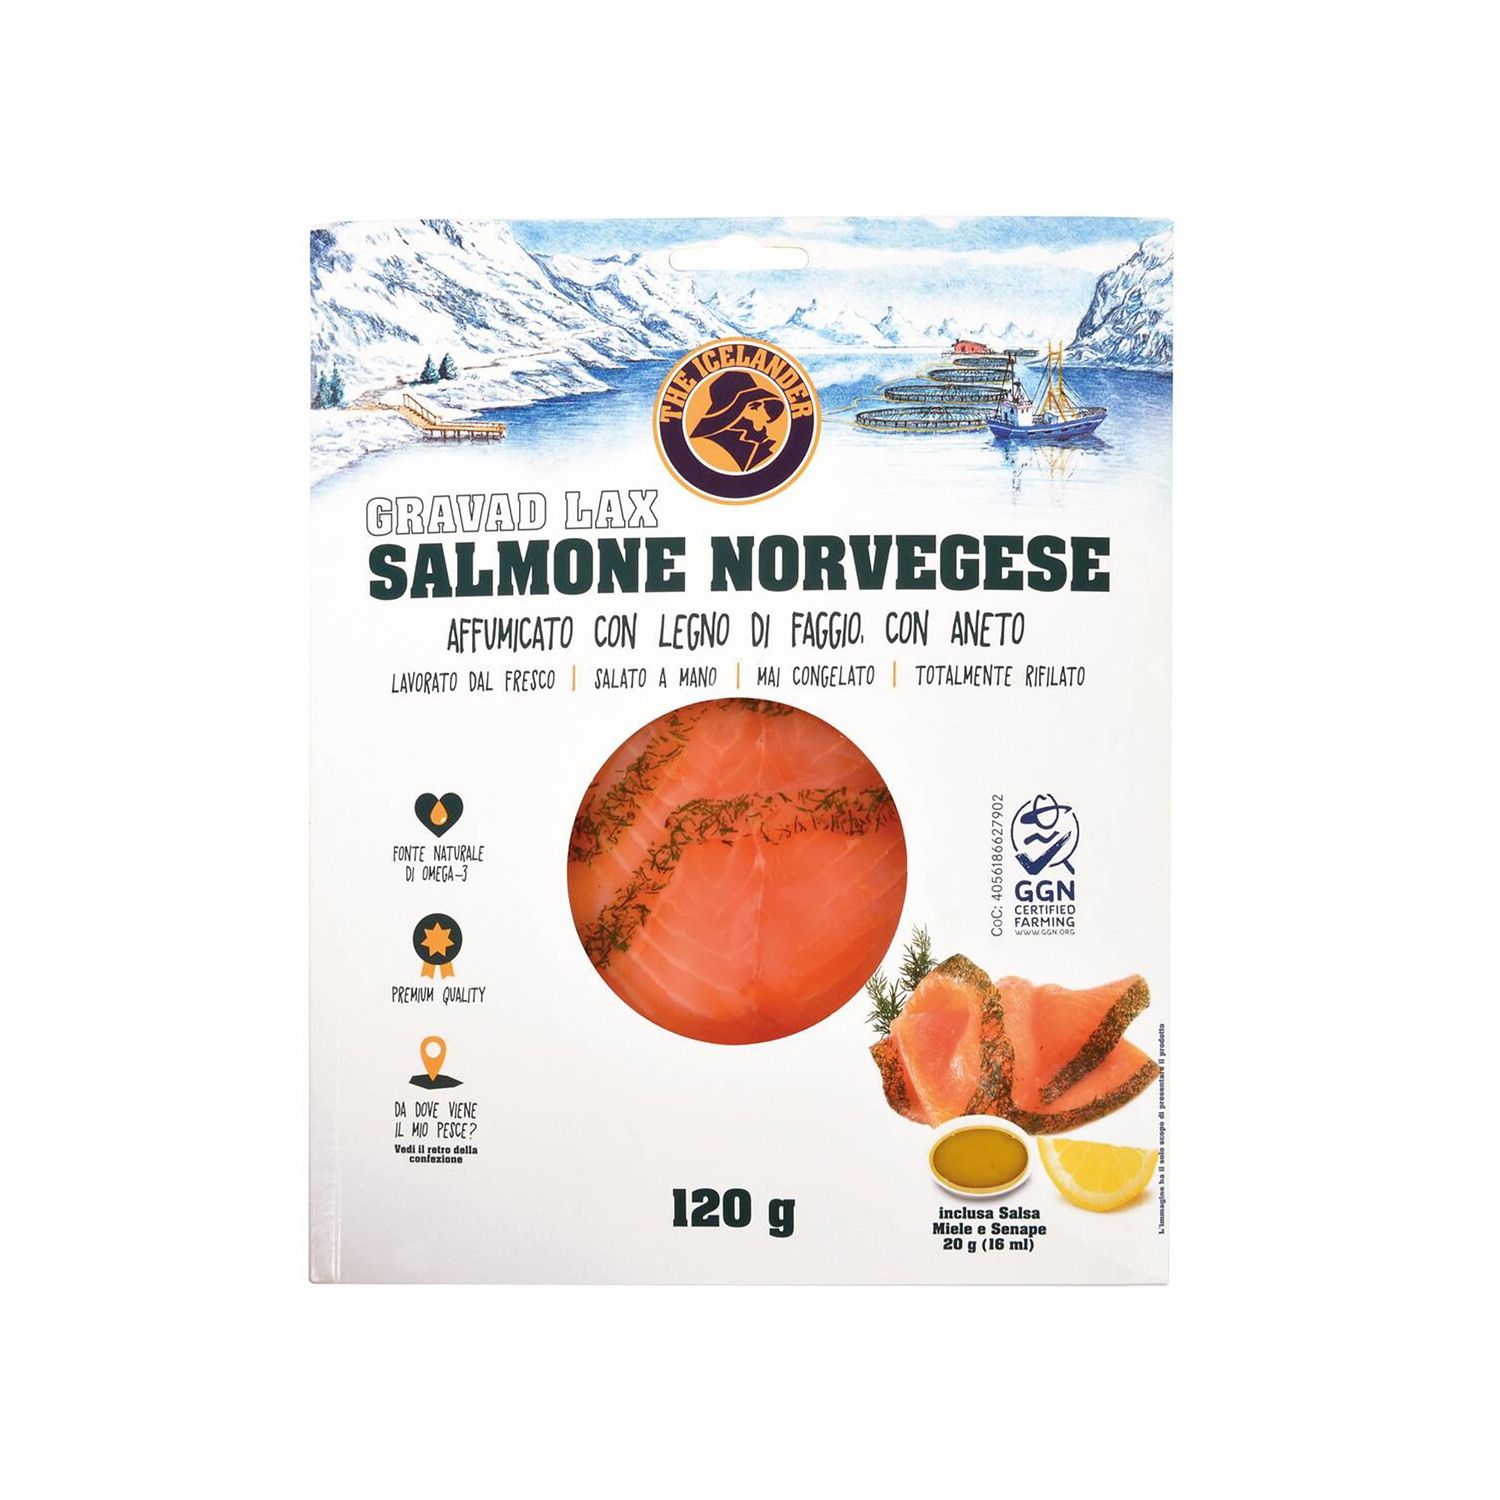 THE ICELANDER Salmone norvegese affumicato Gravad Lax